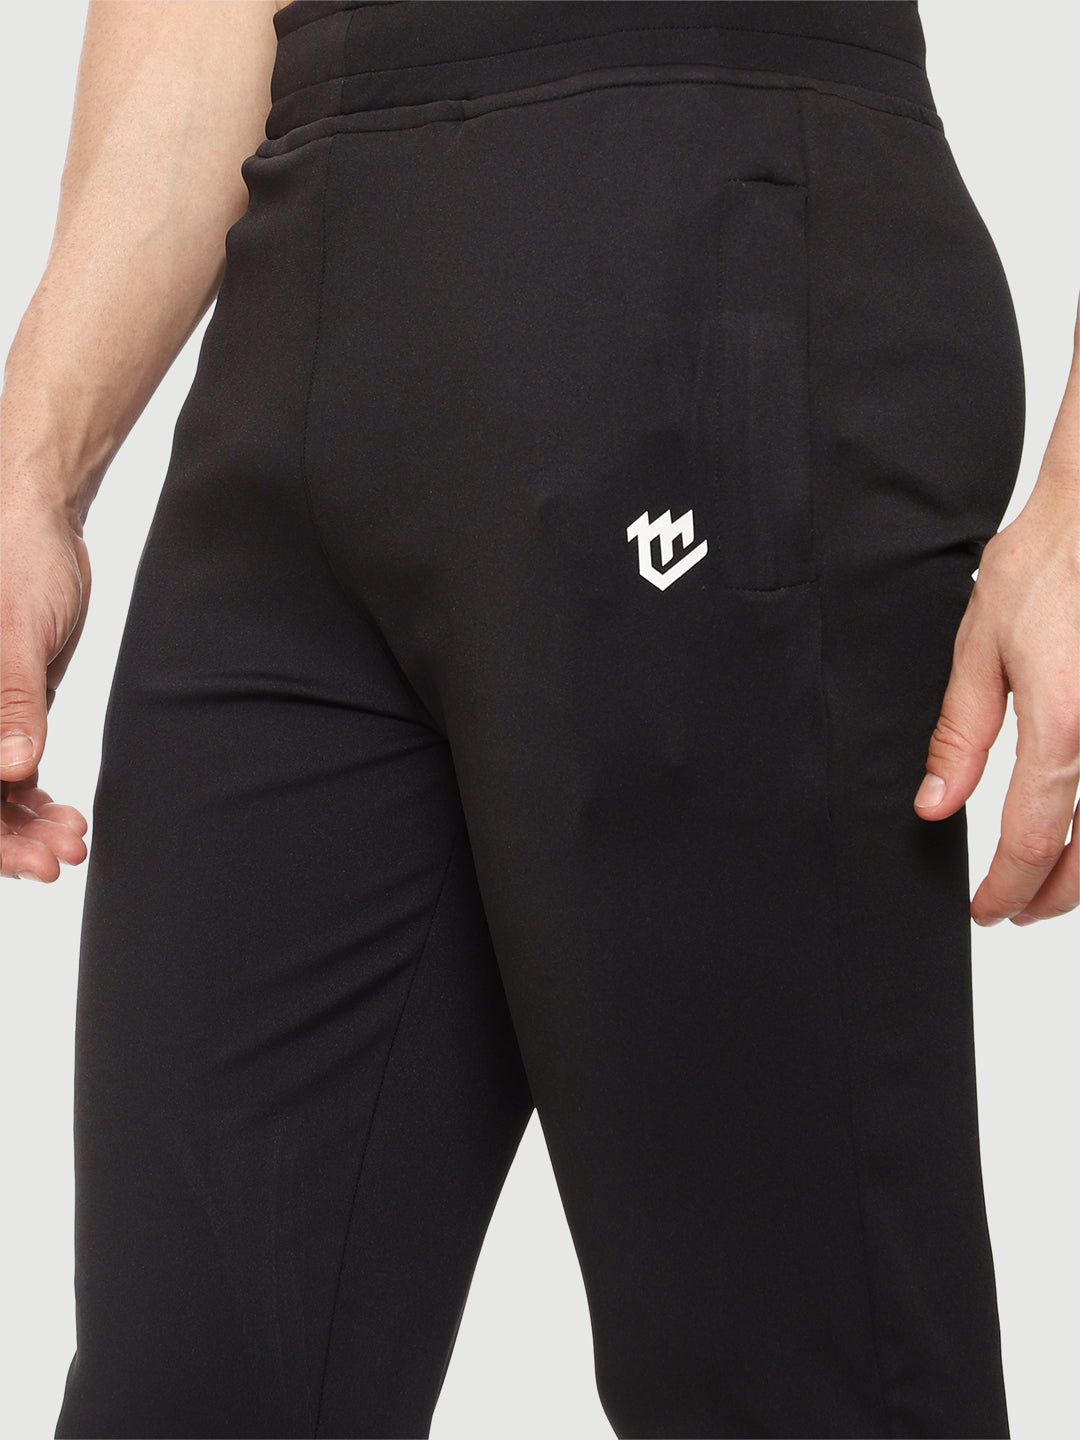 Rapid Dry Black Solid Track Pant for Men